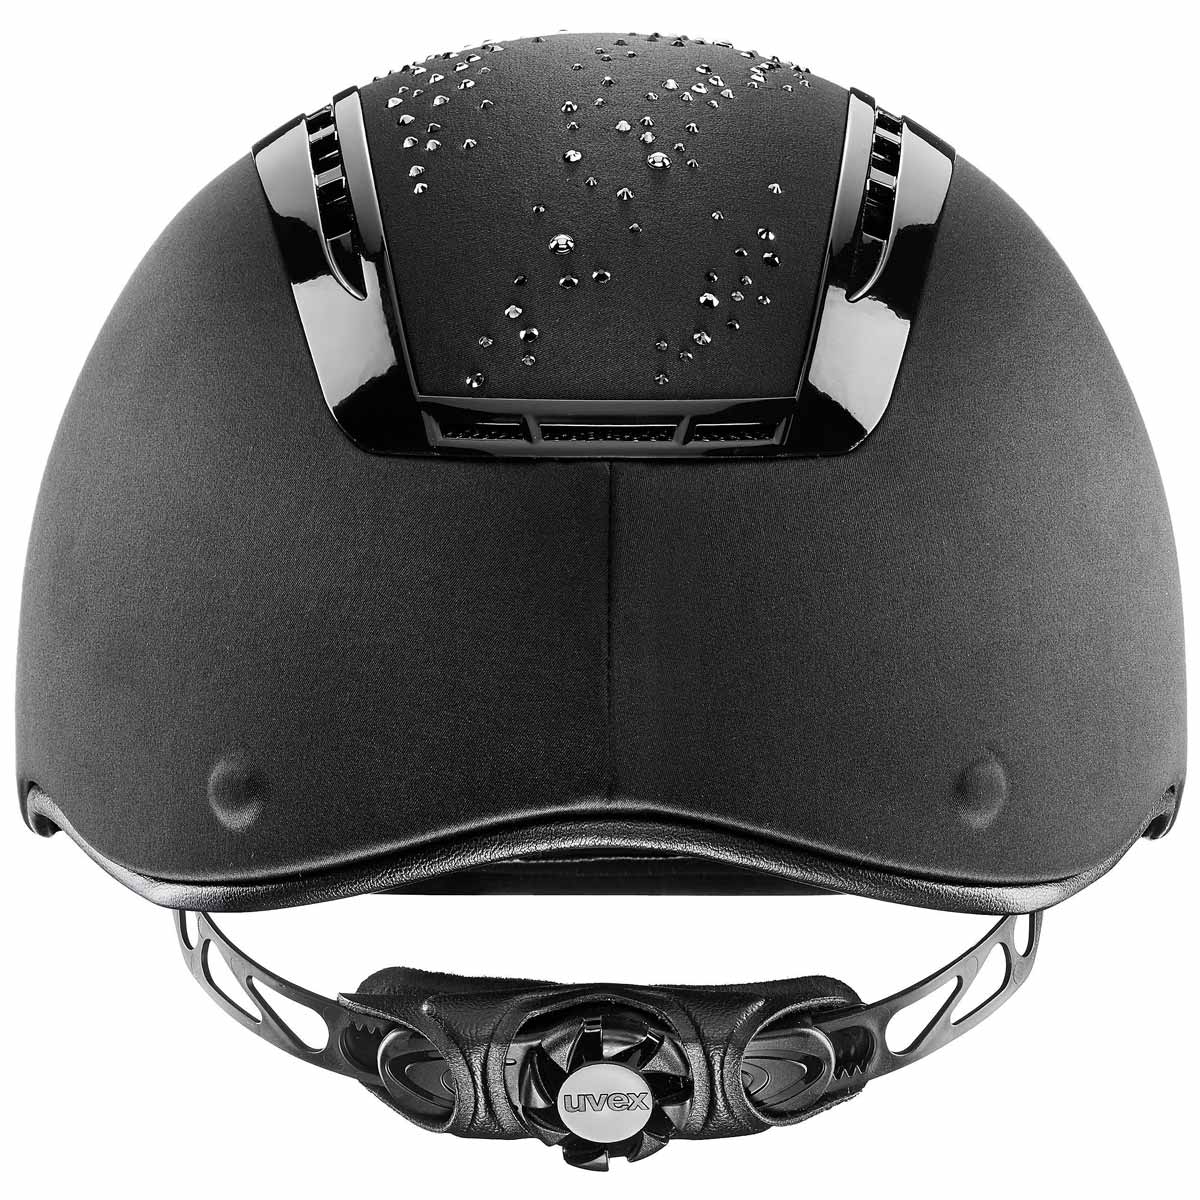 uvex suxxeed diamond riding helmet black XS/S